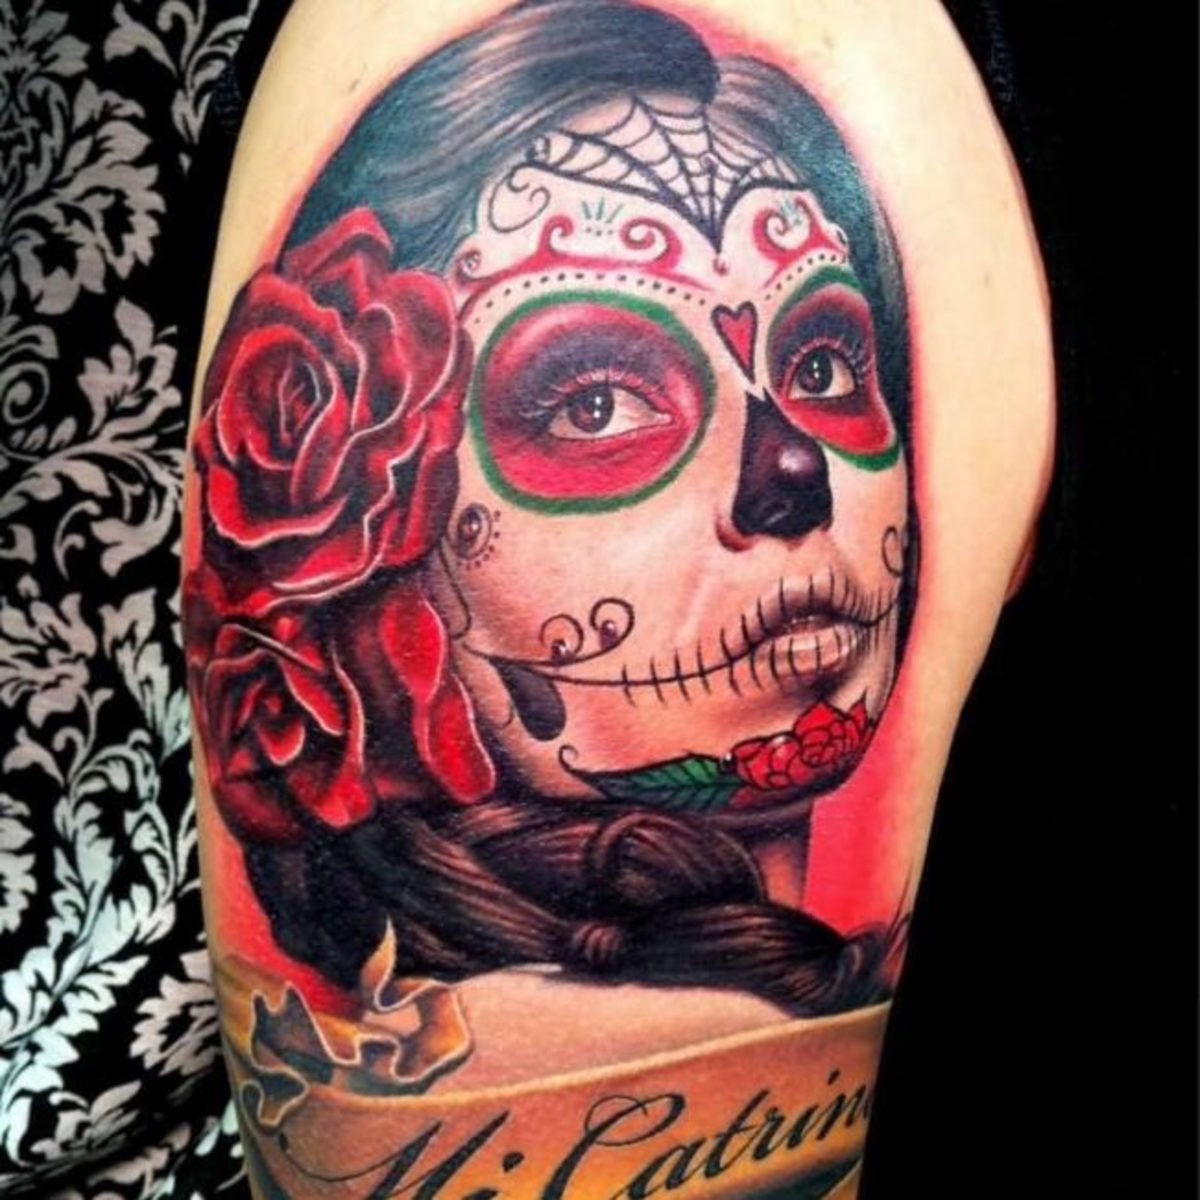 Meksikon tatuoinnit_-2-650x650